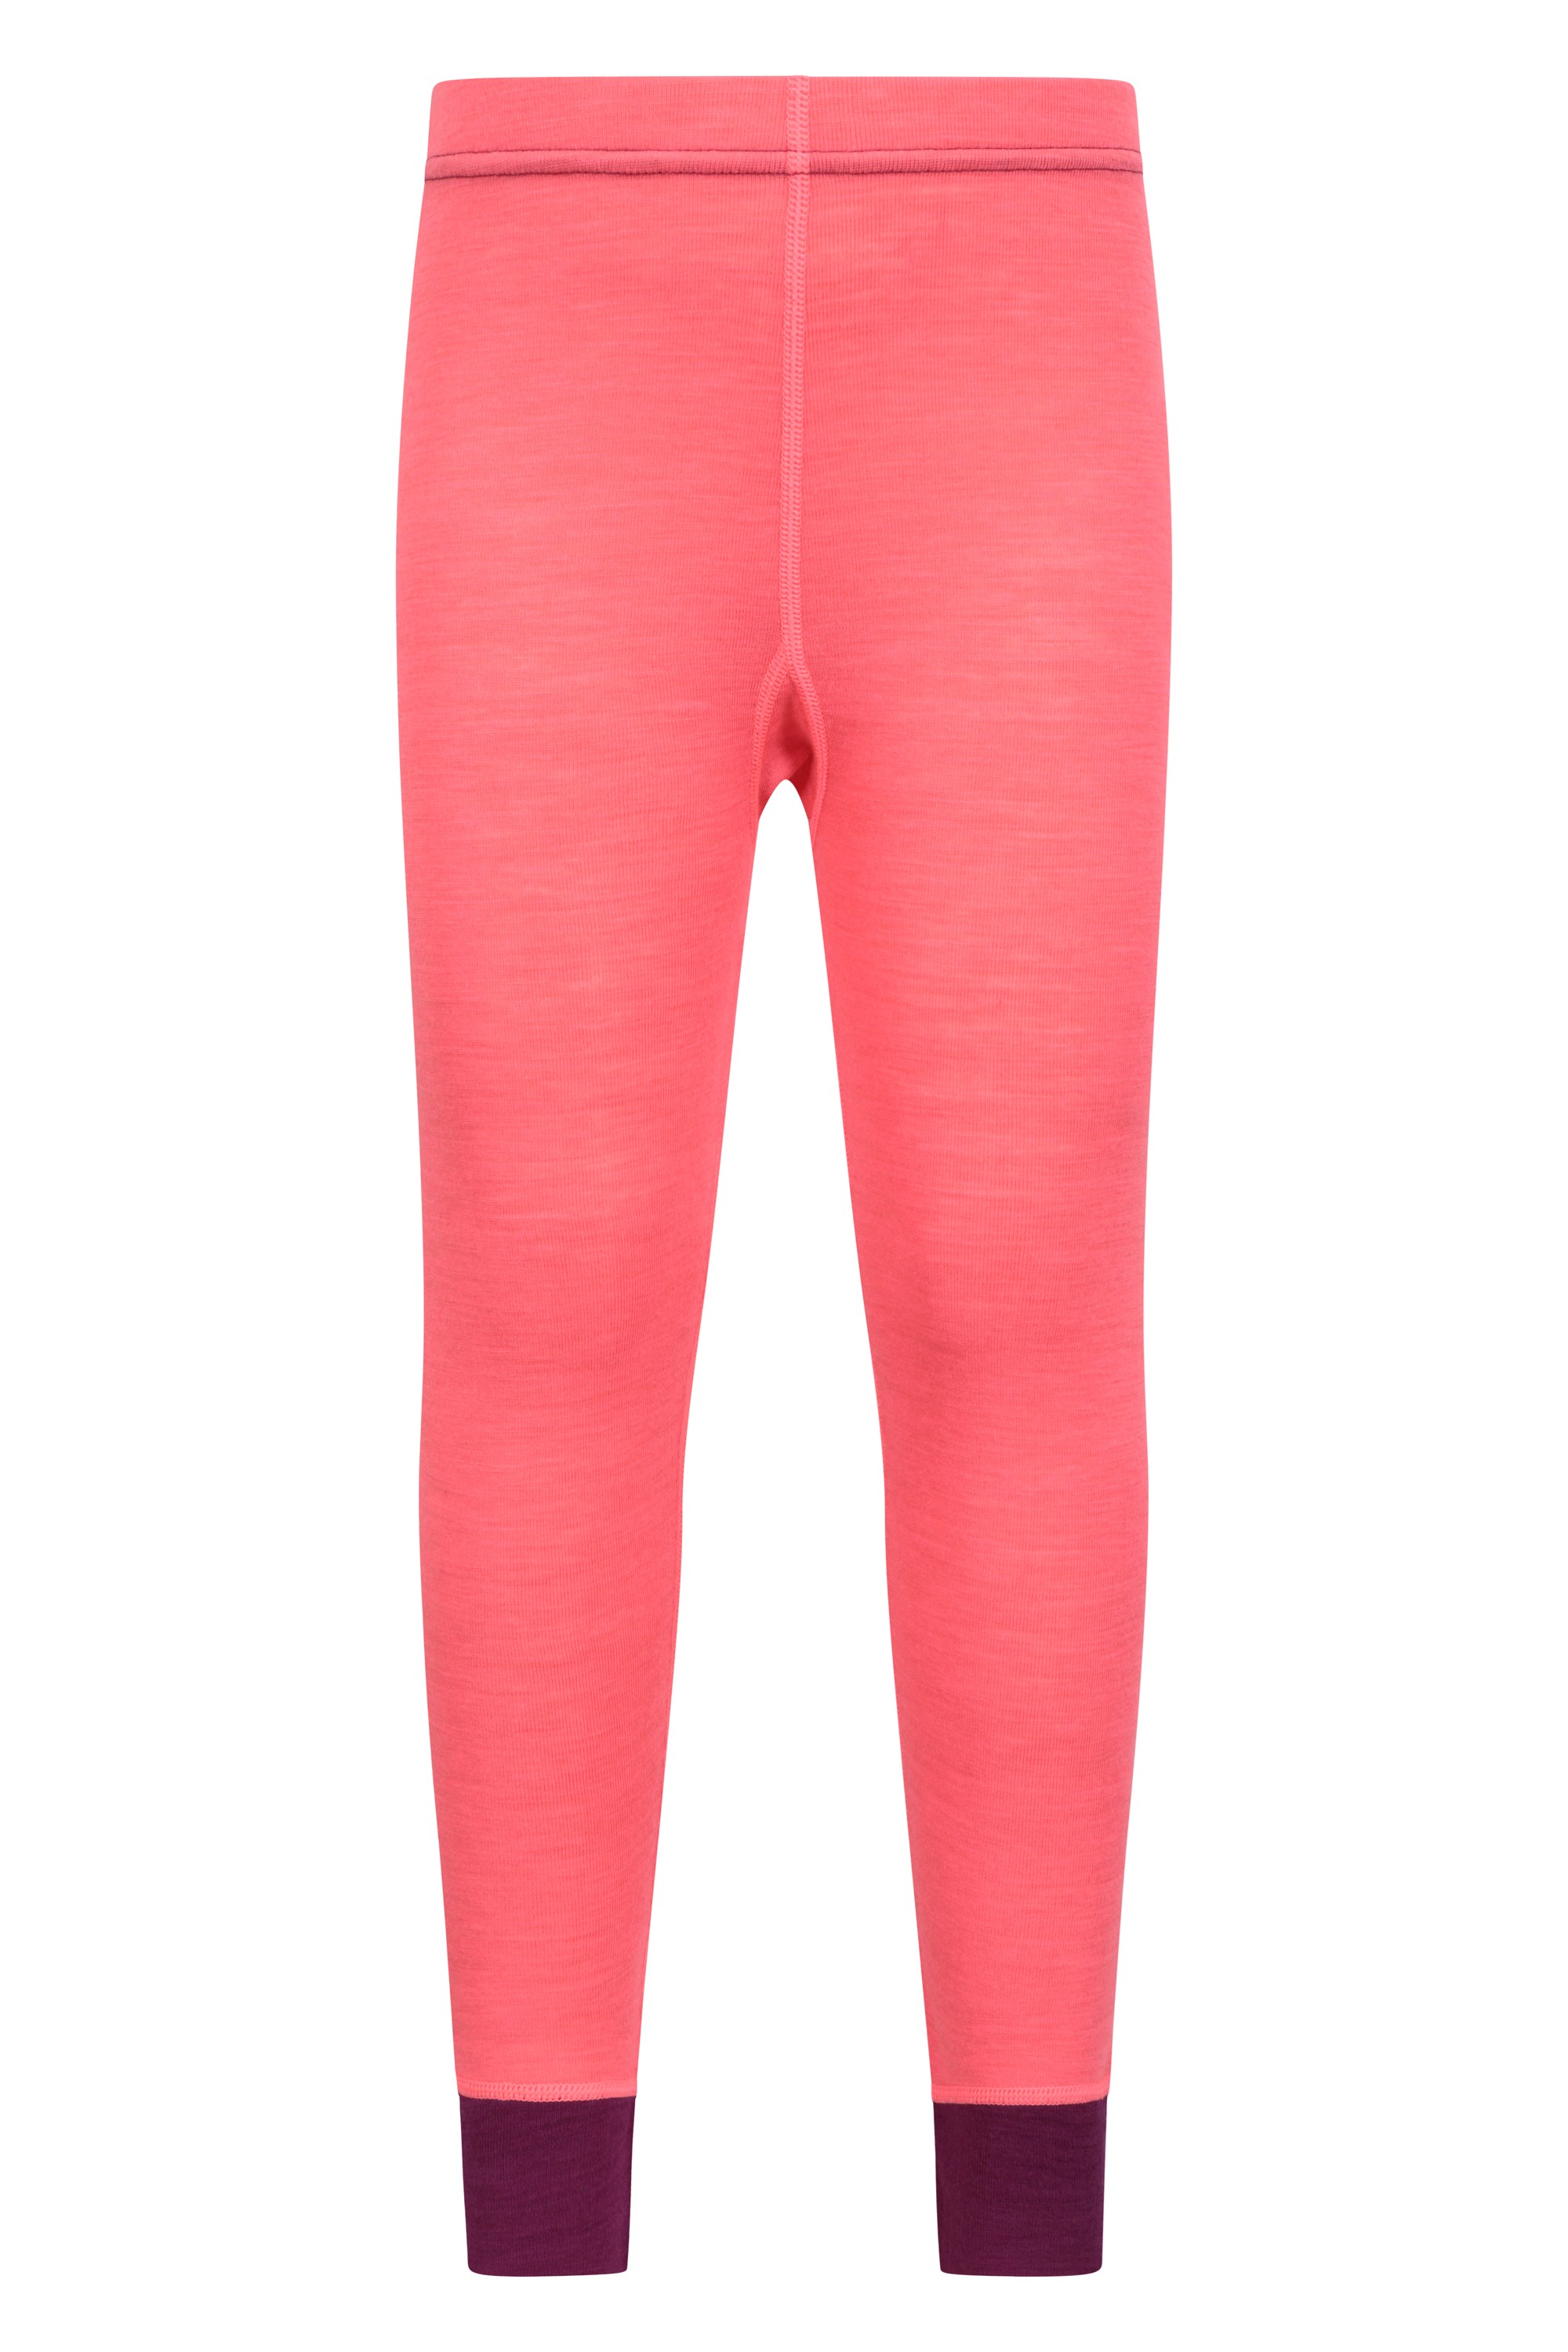 Merino Kids II Baselayer Pants - Bright Pink